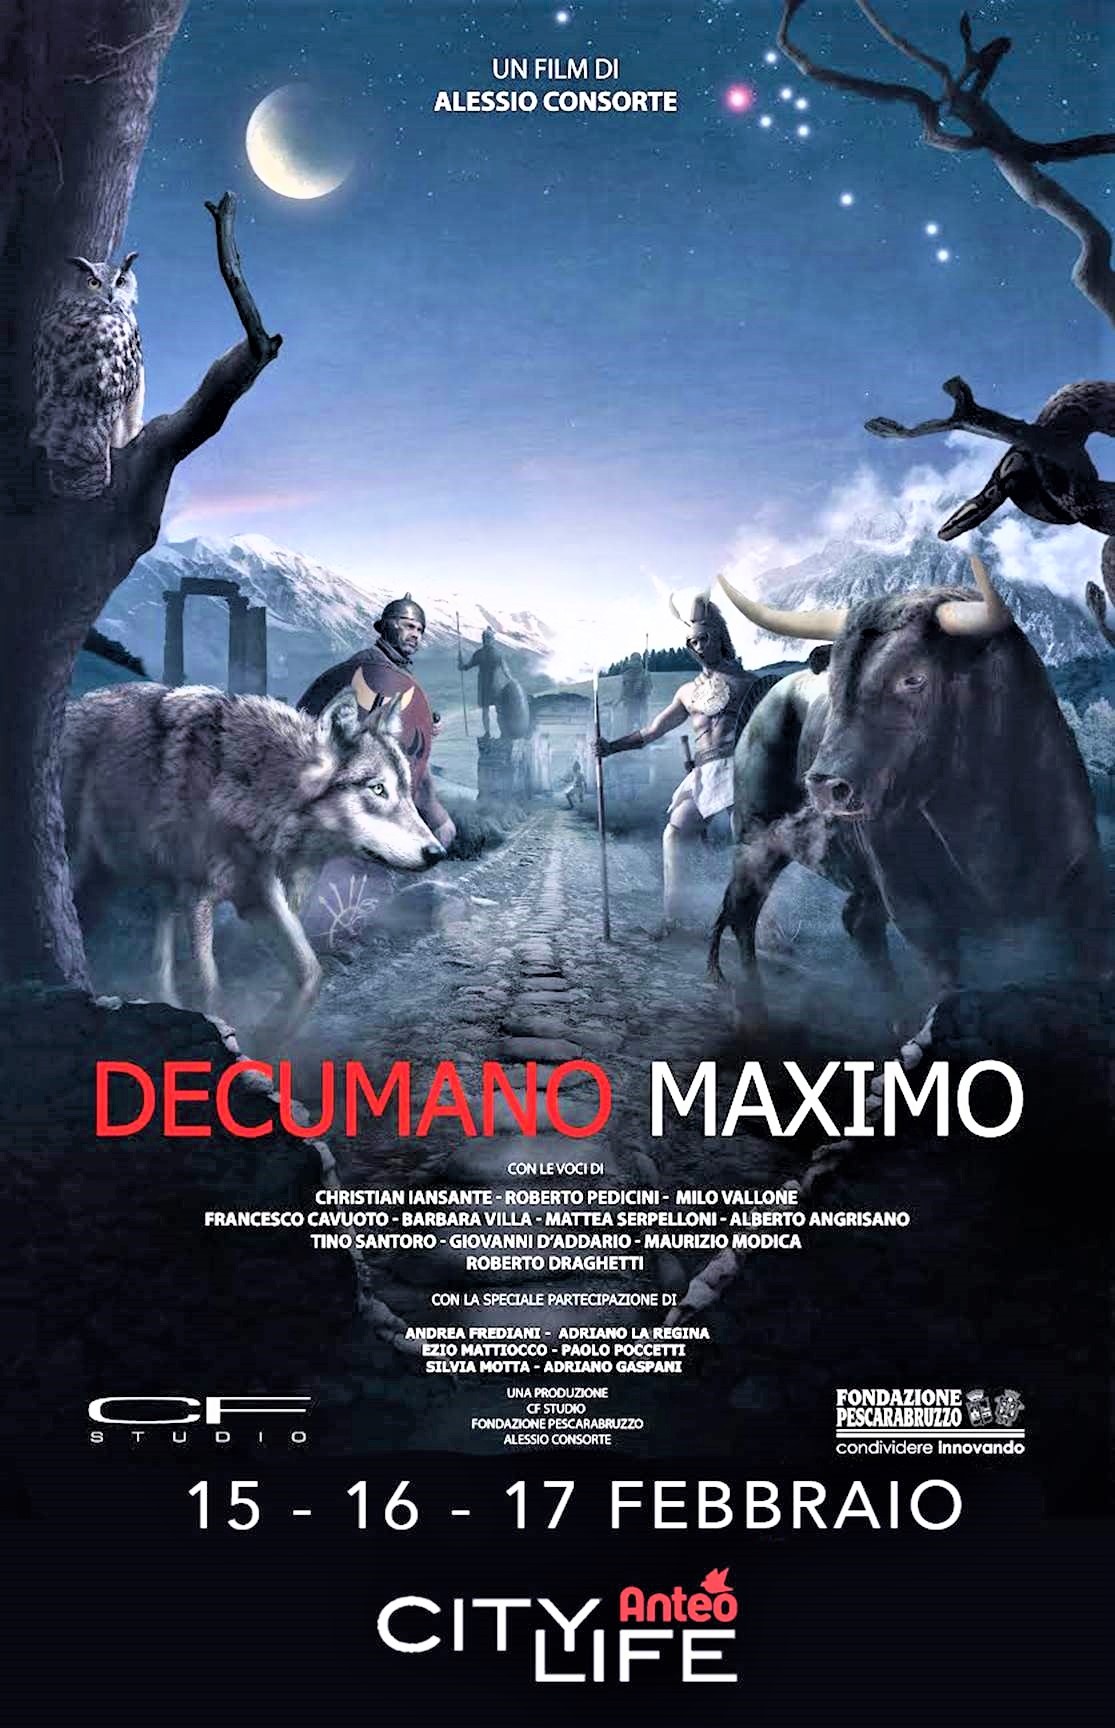 Documano Maximo